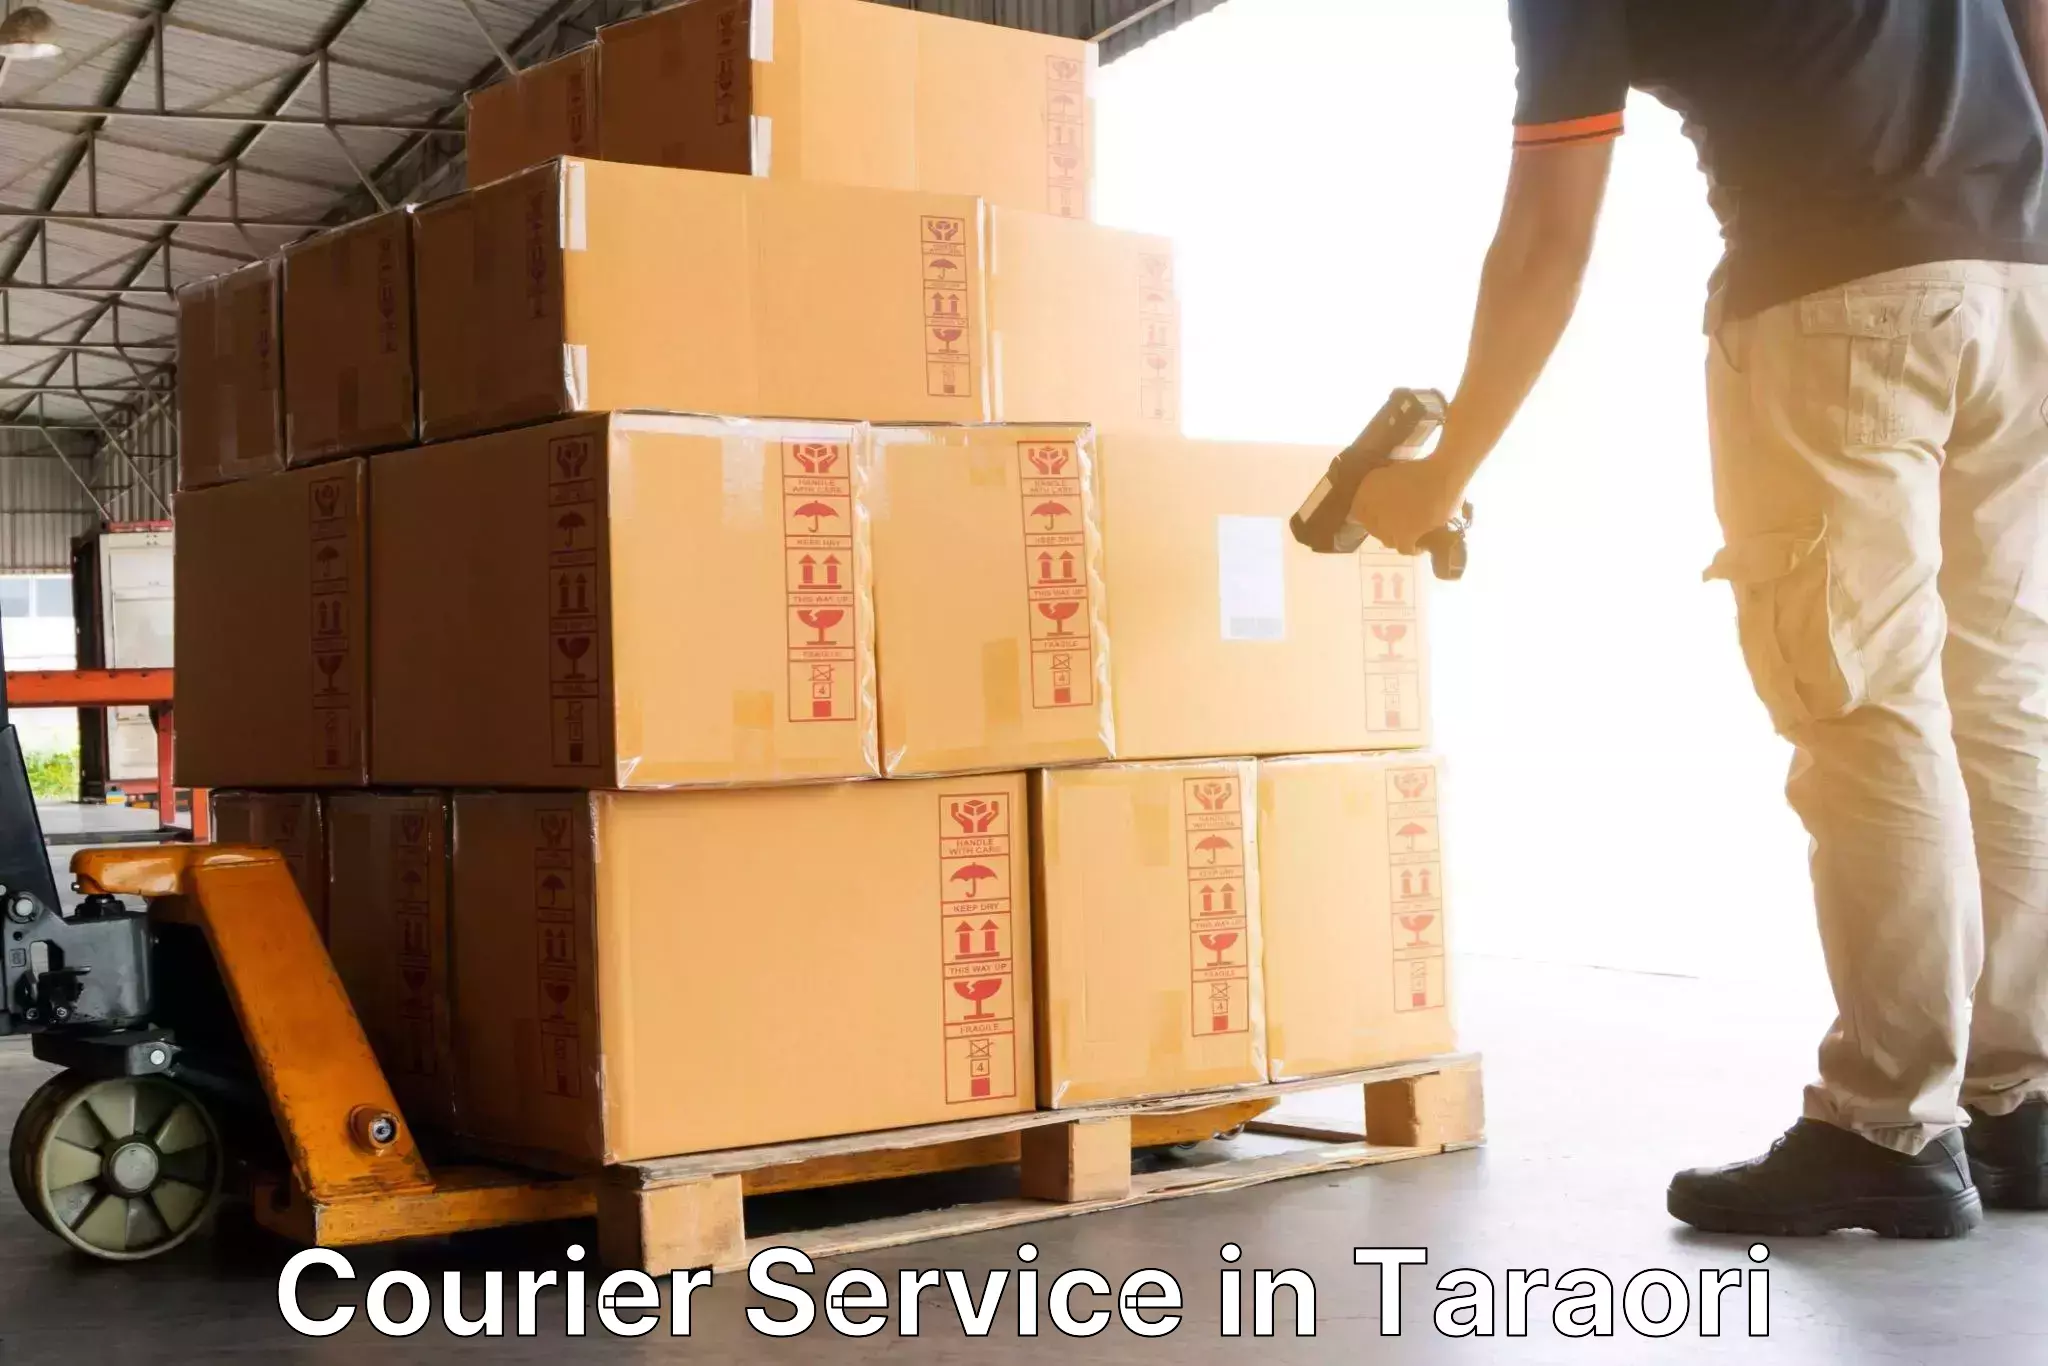 Streamlined delivery processes in Taraori